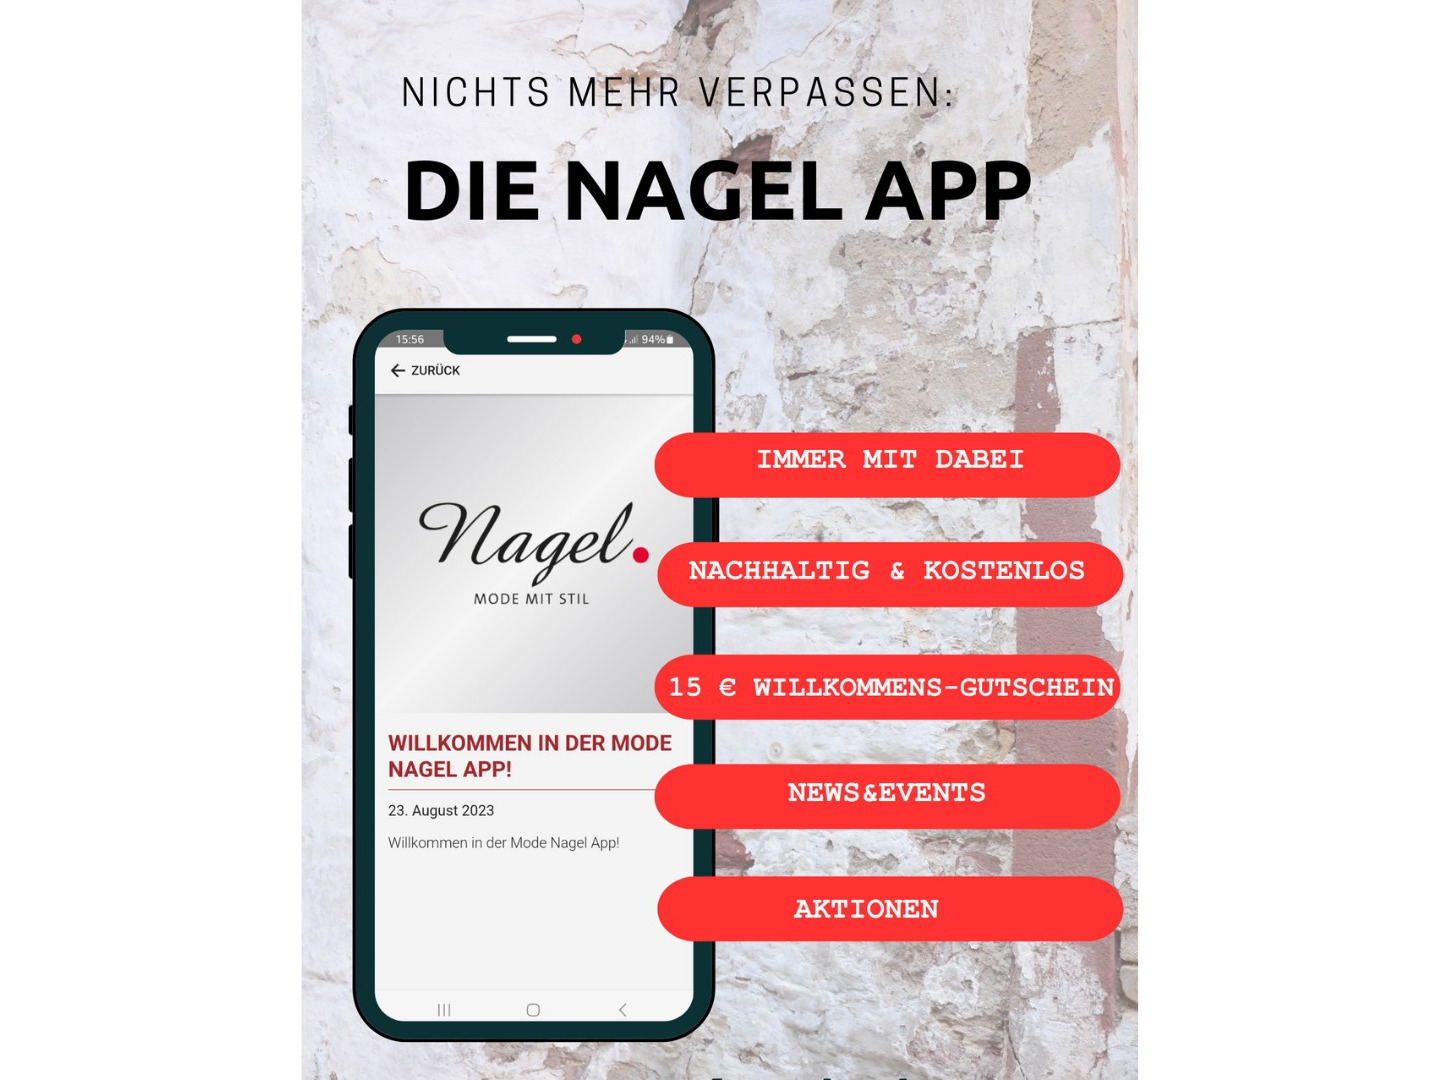 Bilder Modehaus Nagel GmbH